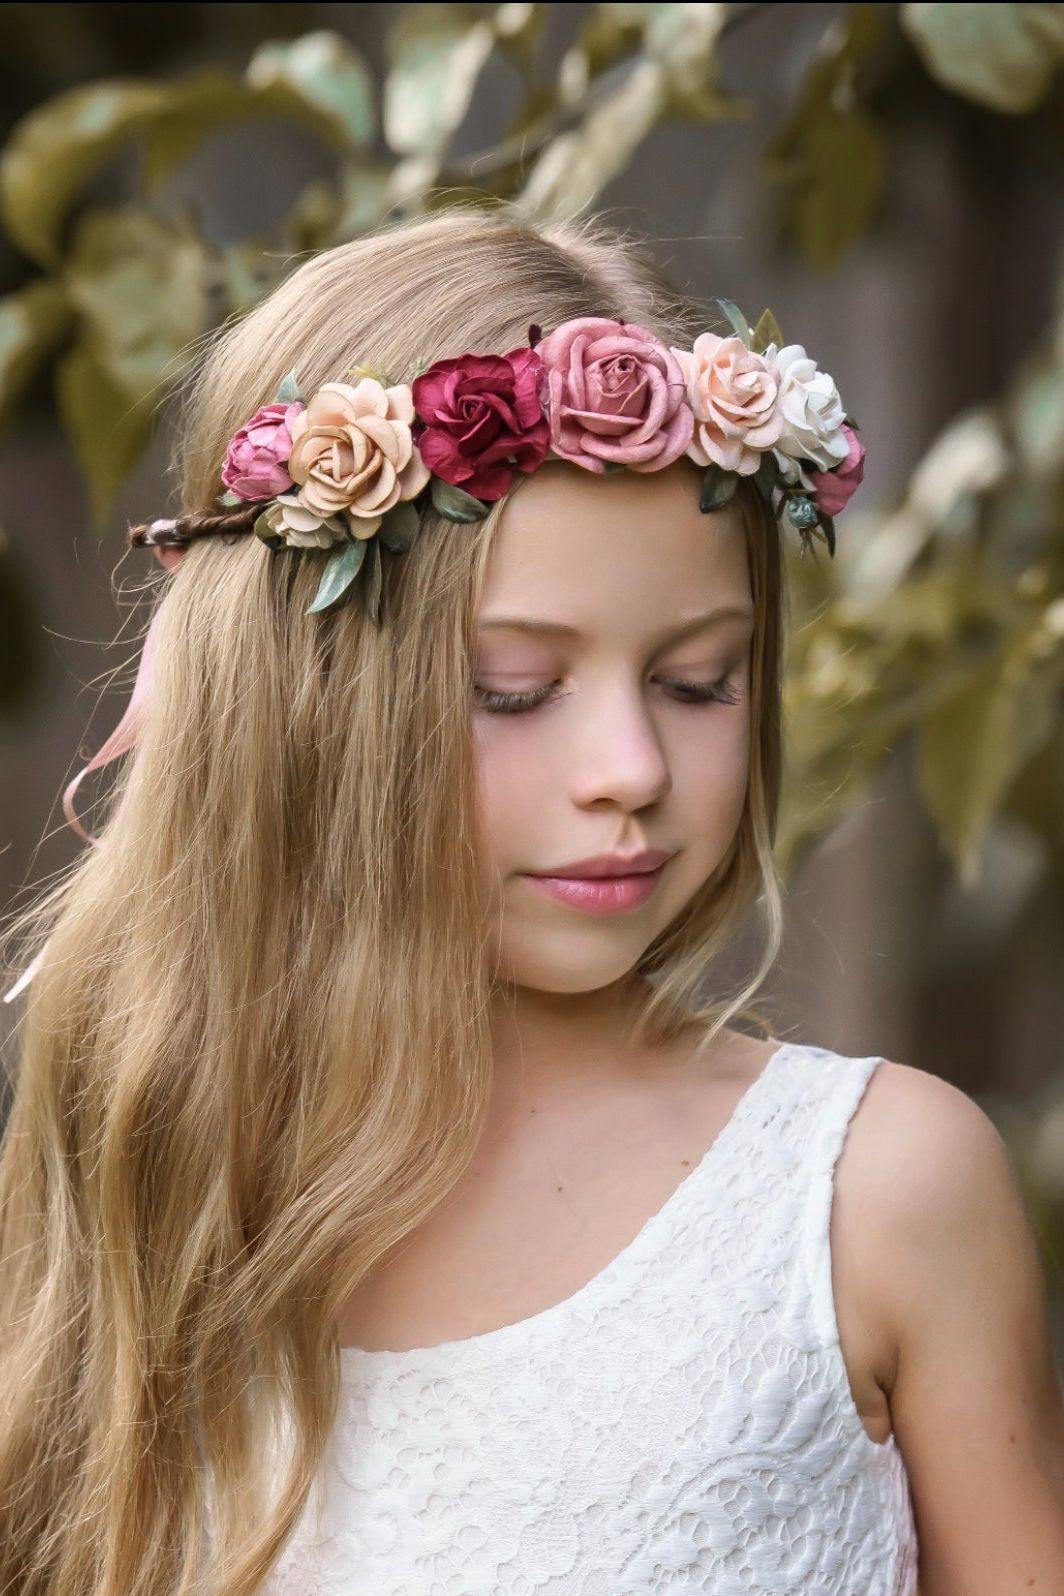 Floral Hair Wreaths on Grapevine / Wedding Hair Accessories - The Little Kitten Boutique